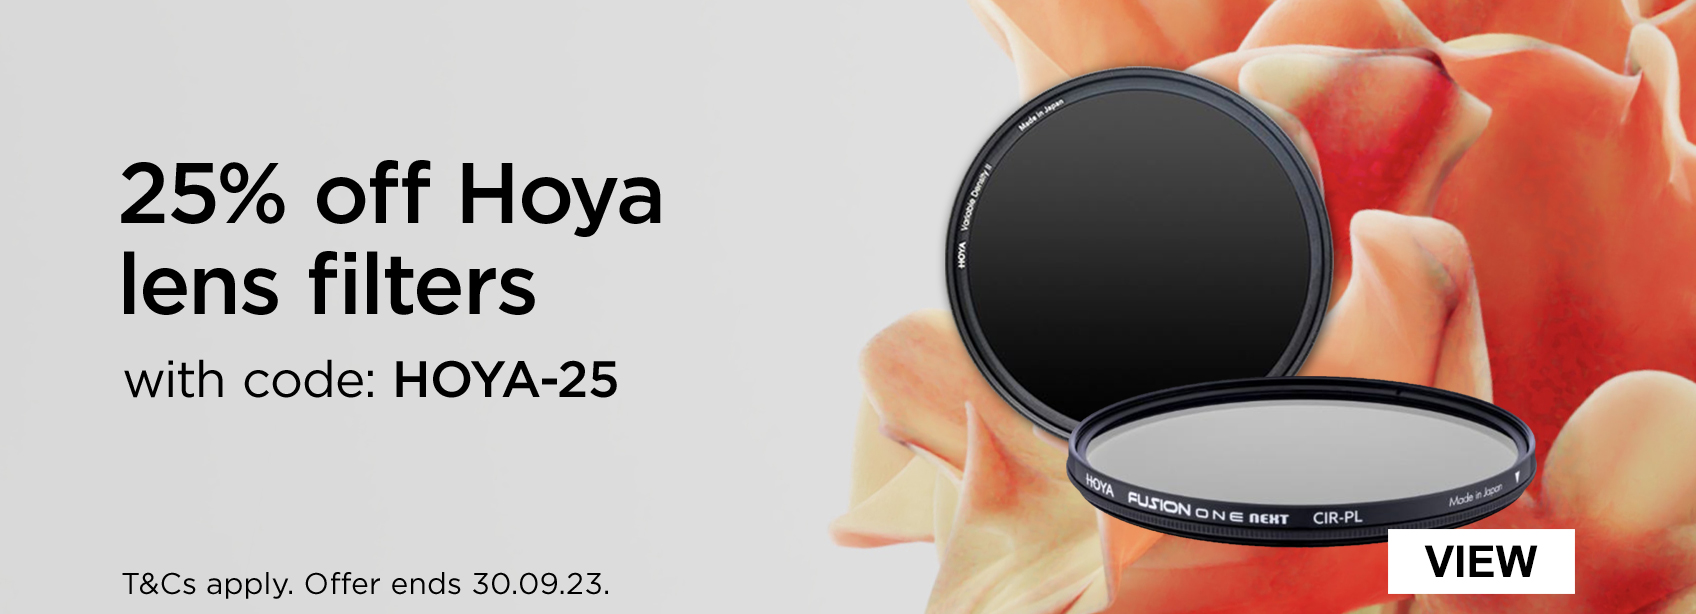 25% off Hoya lens filters with code: HOYA-25